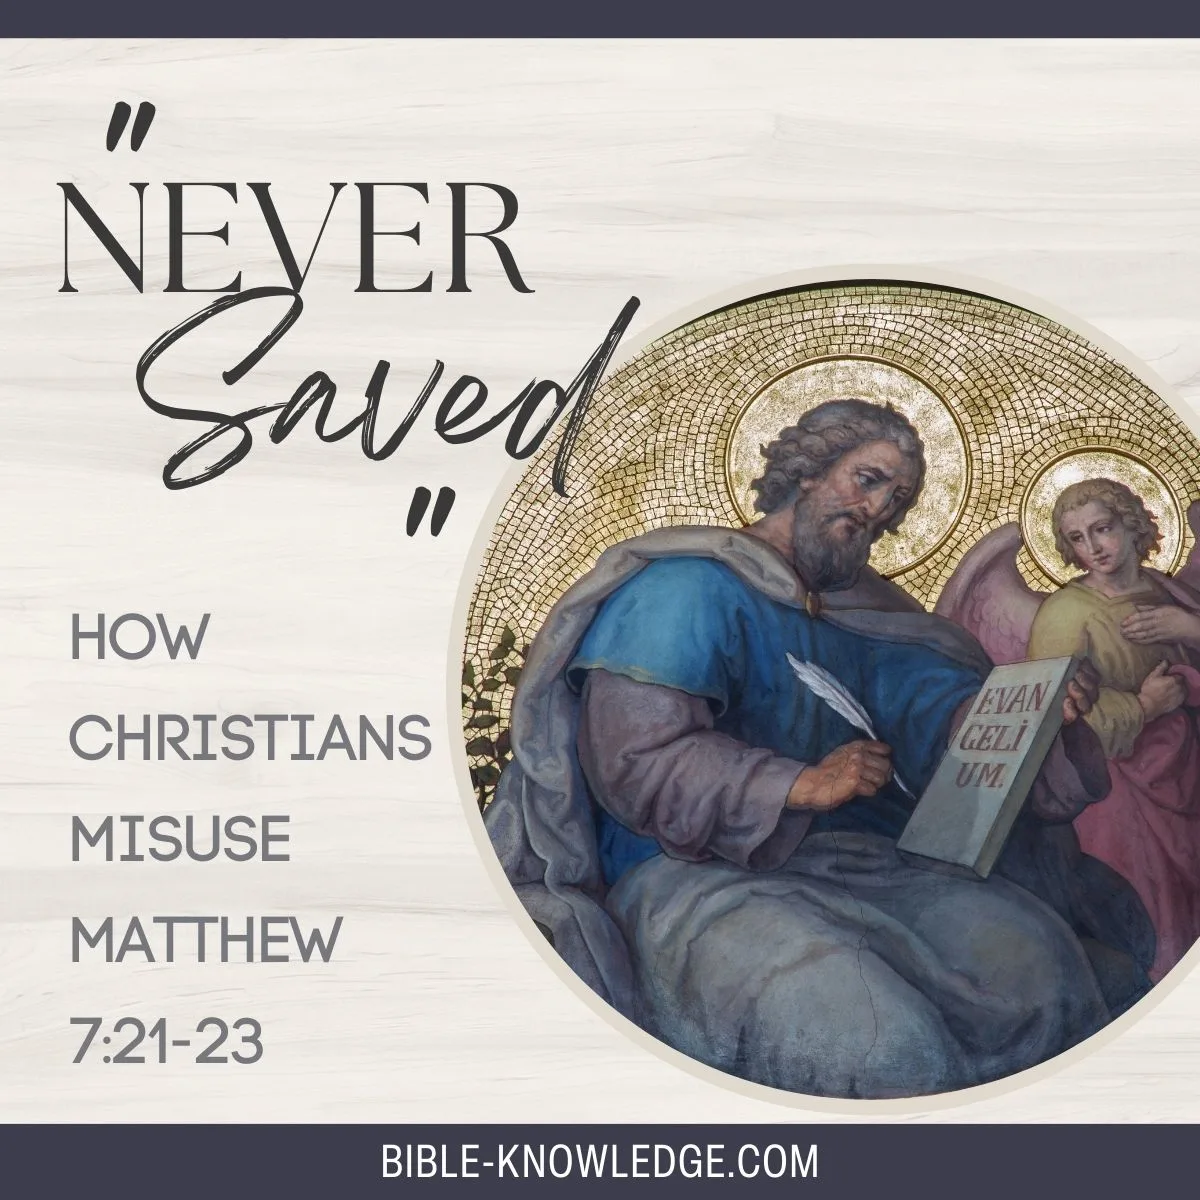 How Christians misuse Matthew 7:21-23